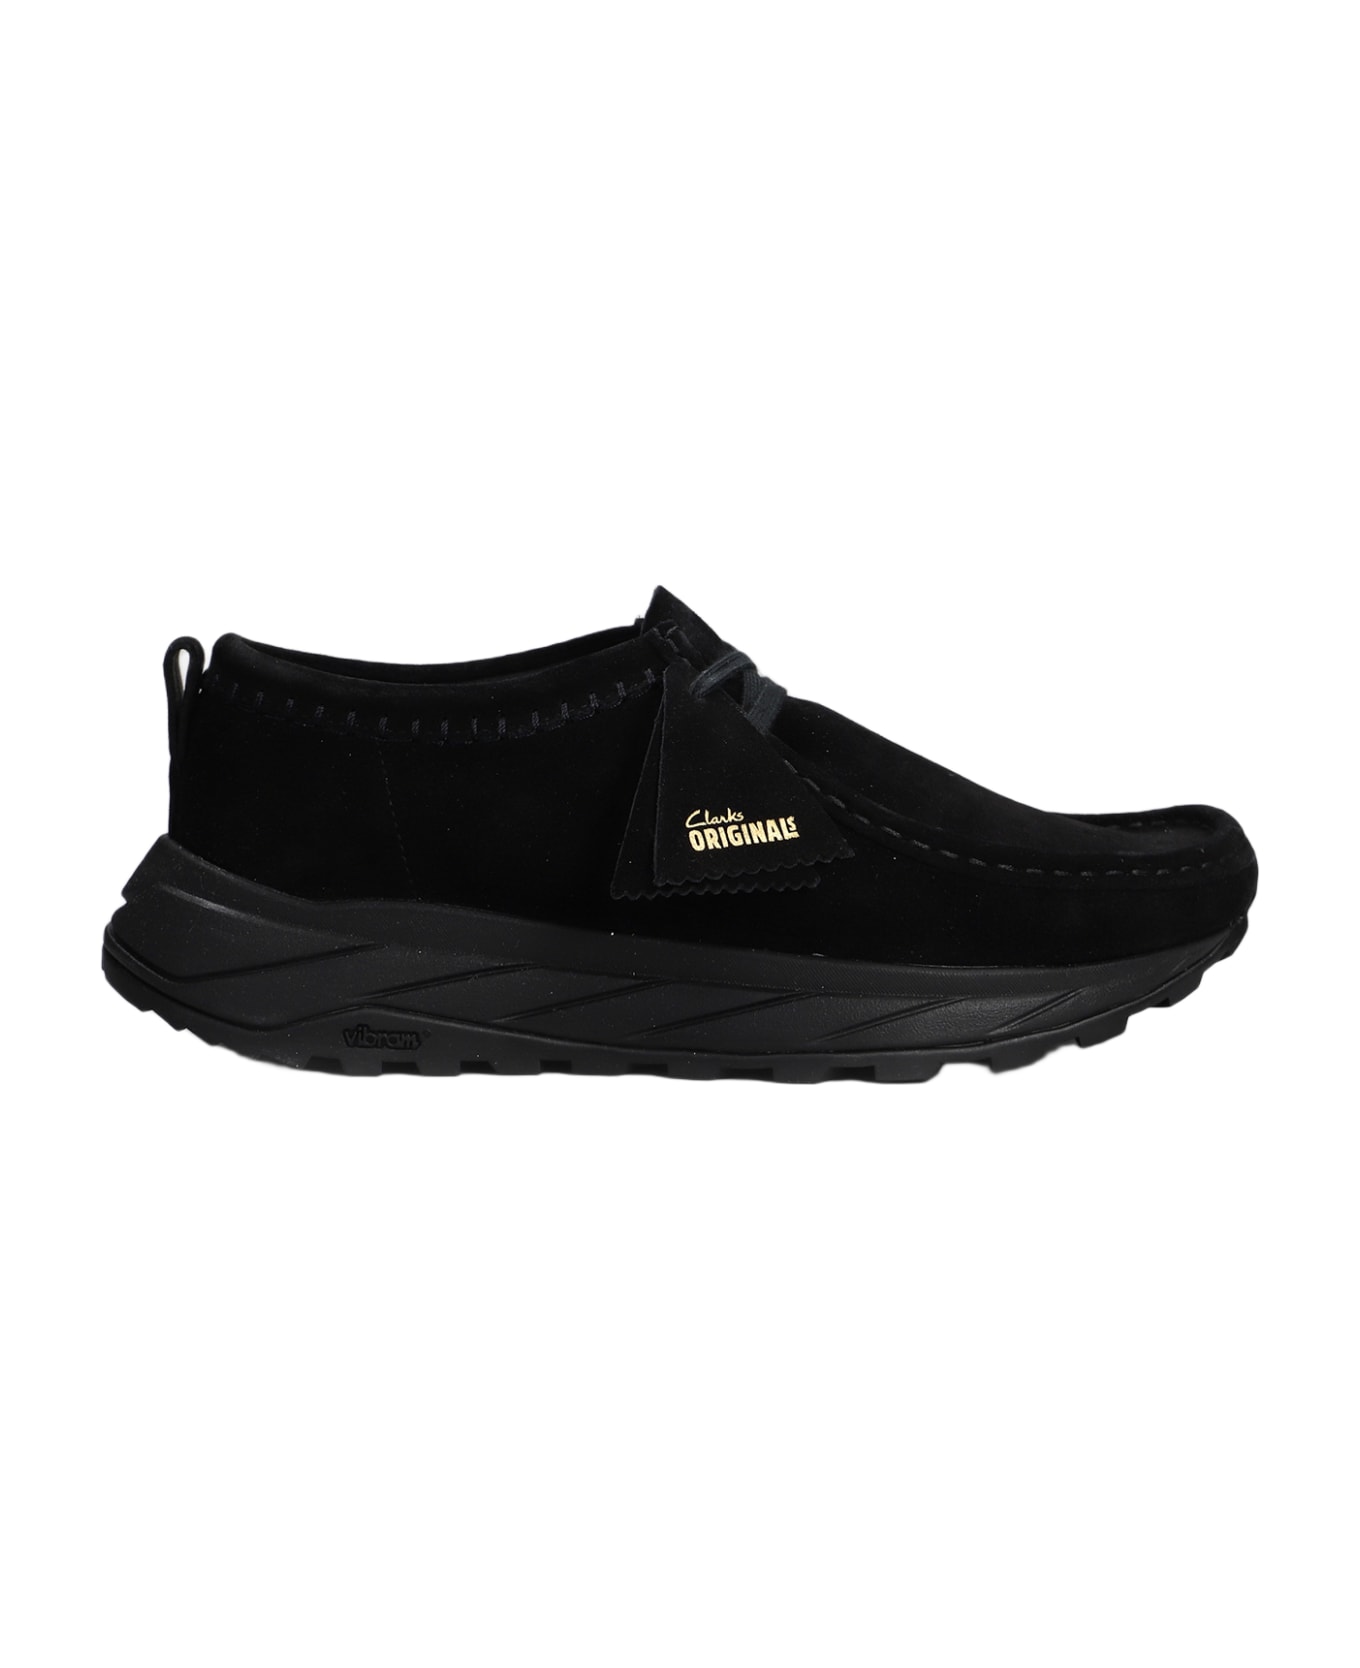 Clarks Walla Eden Lo Lace Up Shoes In Black Suede - black